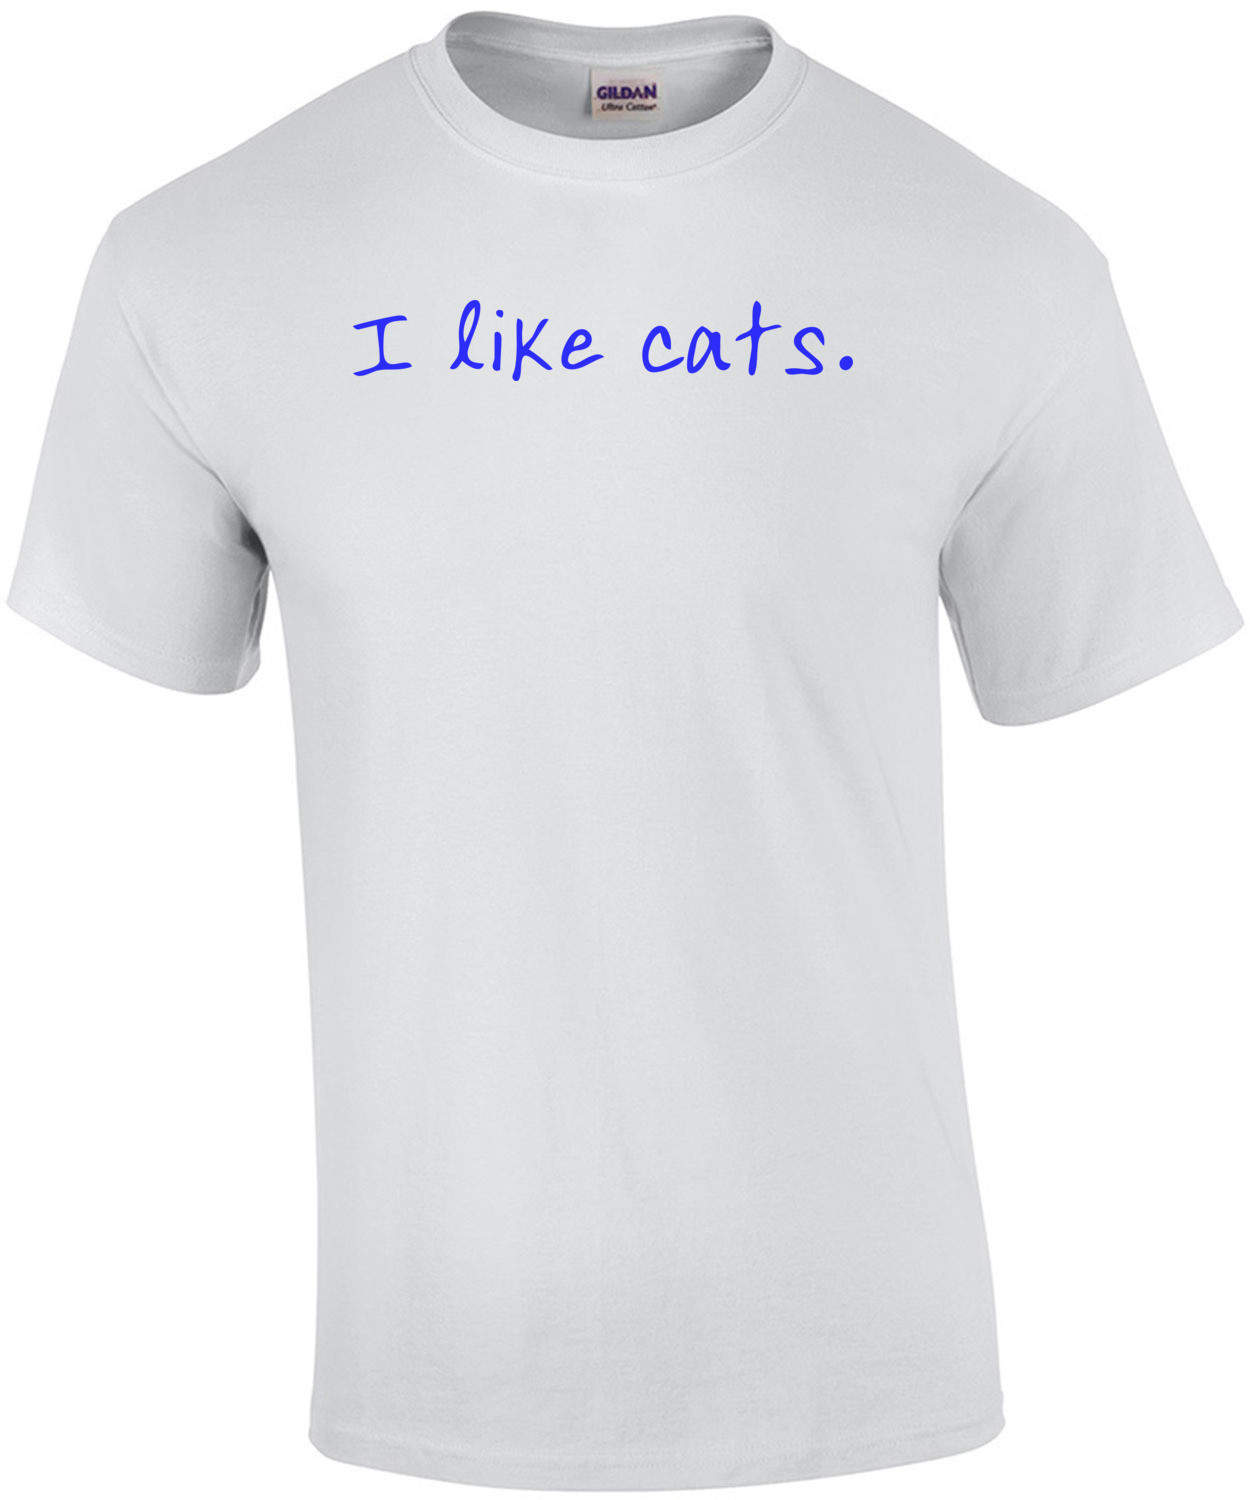 I like cats. Funny T-Shirt Shirt